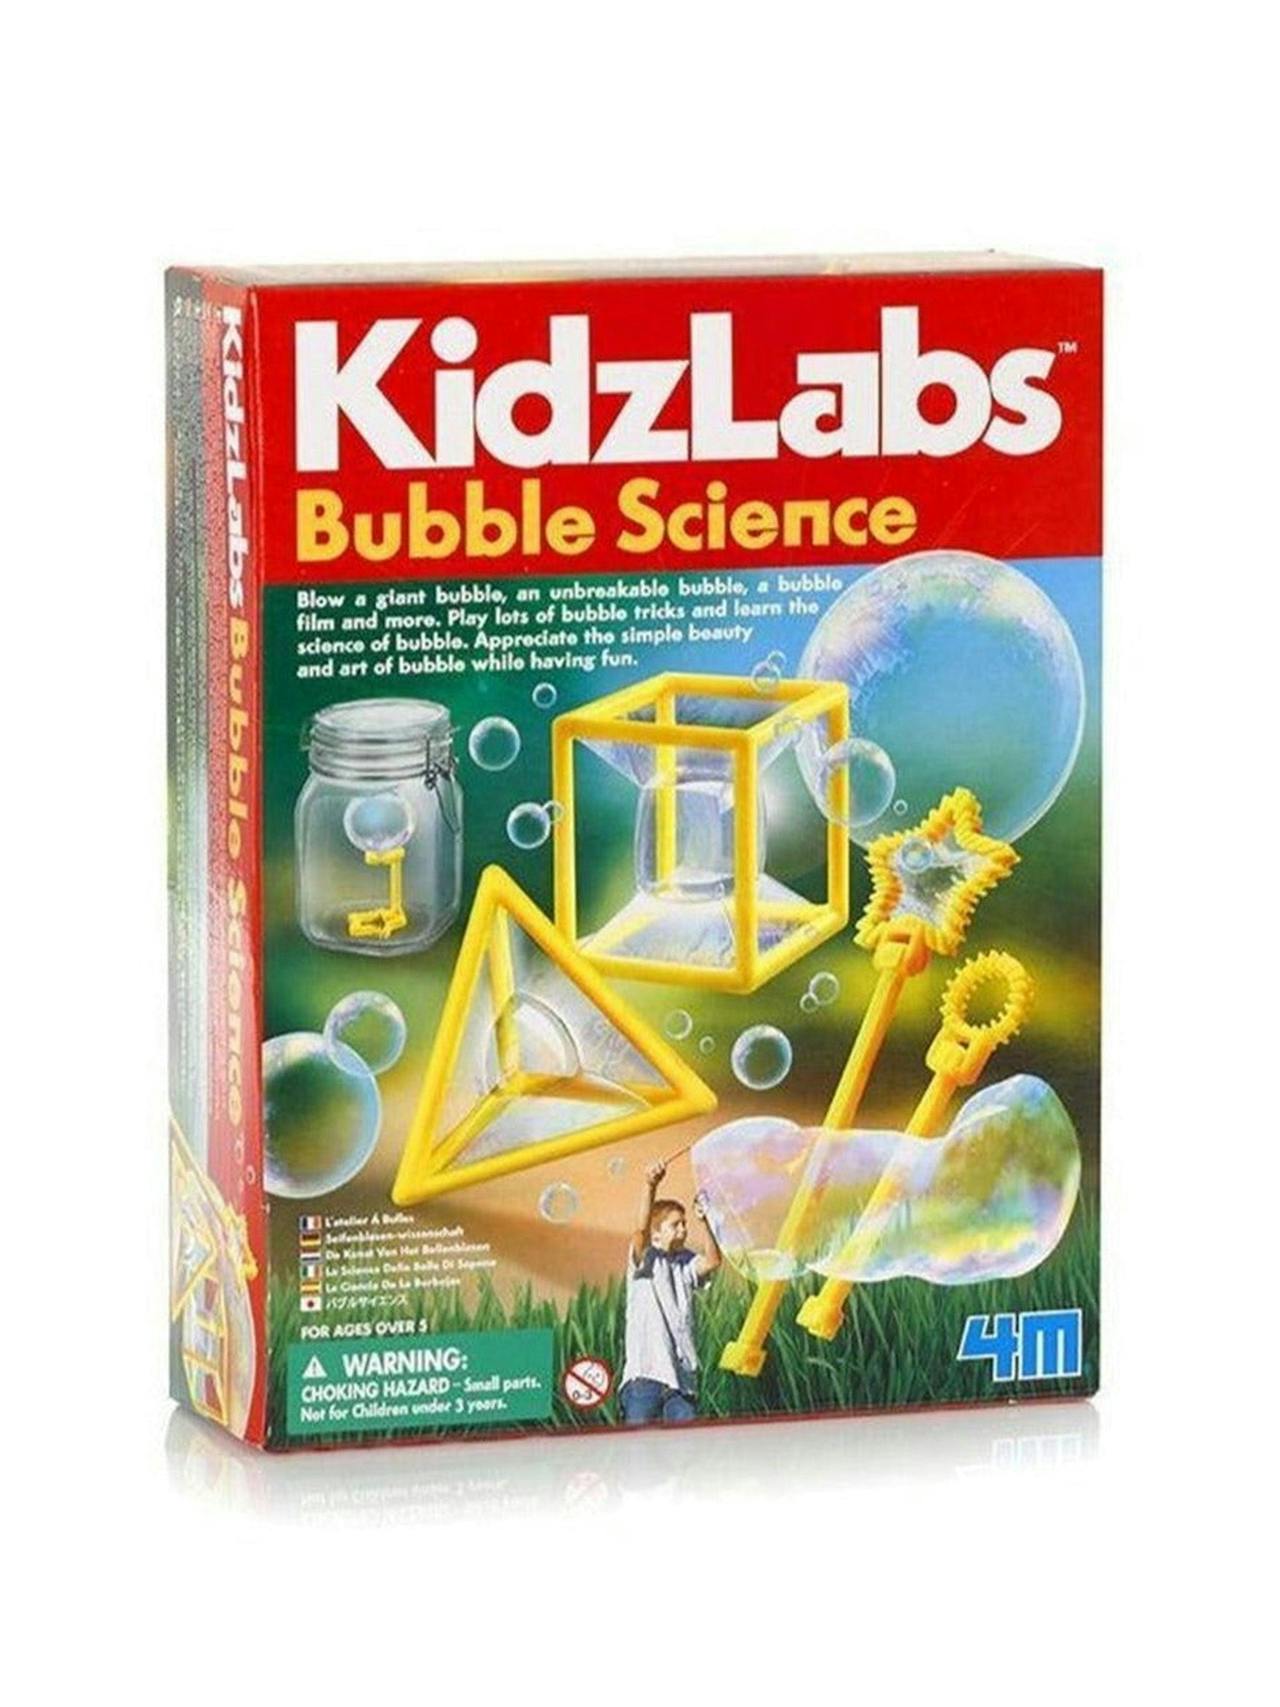 Bubble science kit